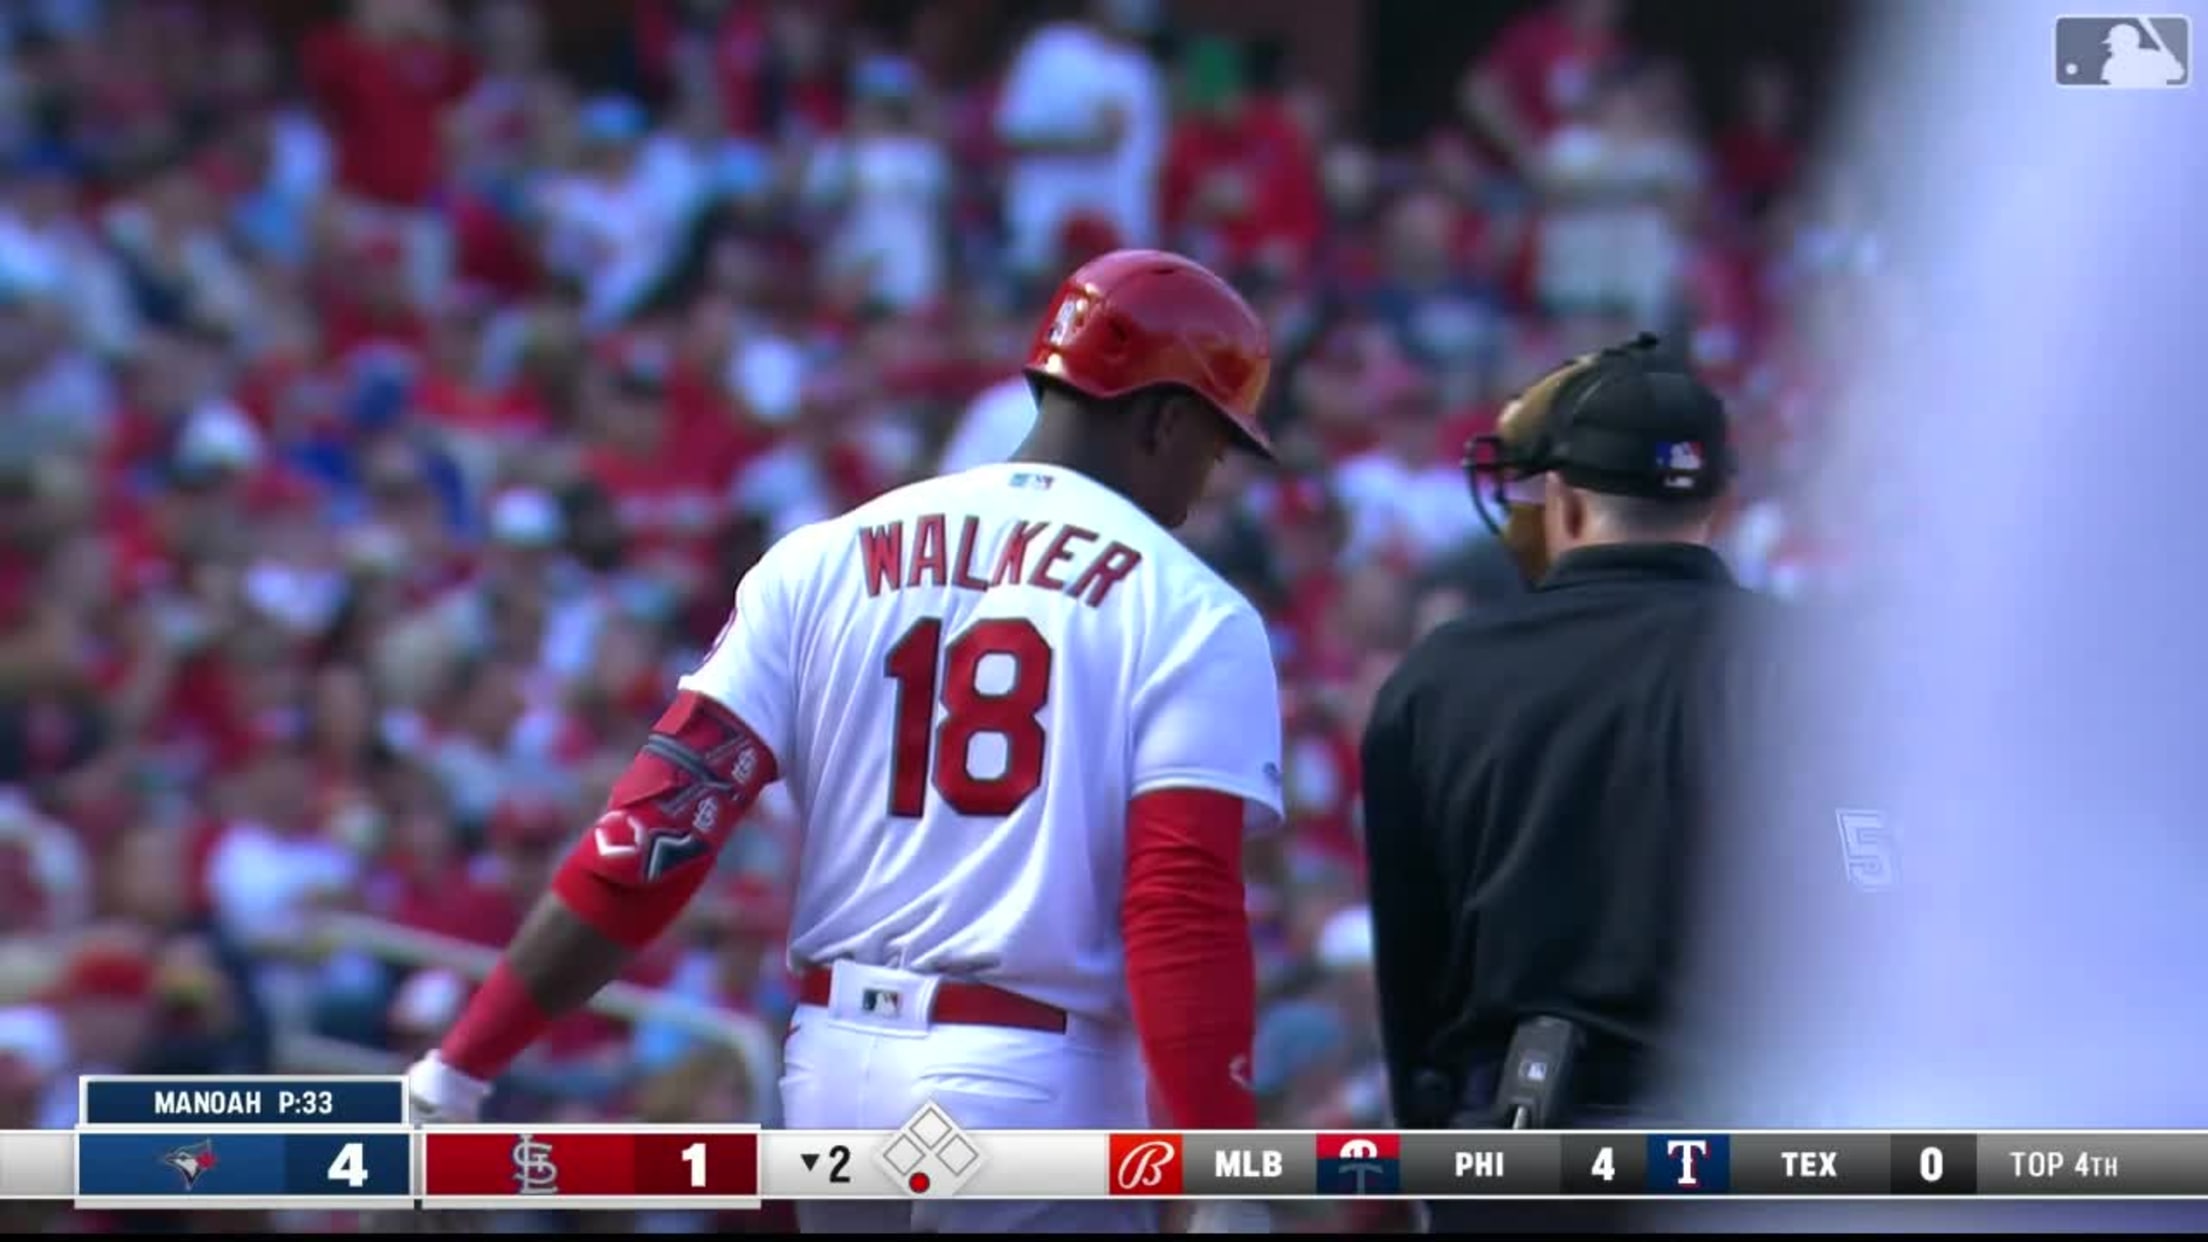 Jordan Walker's first MLB hit